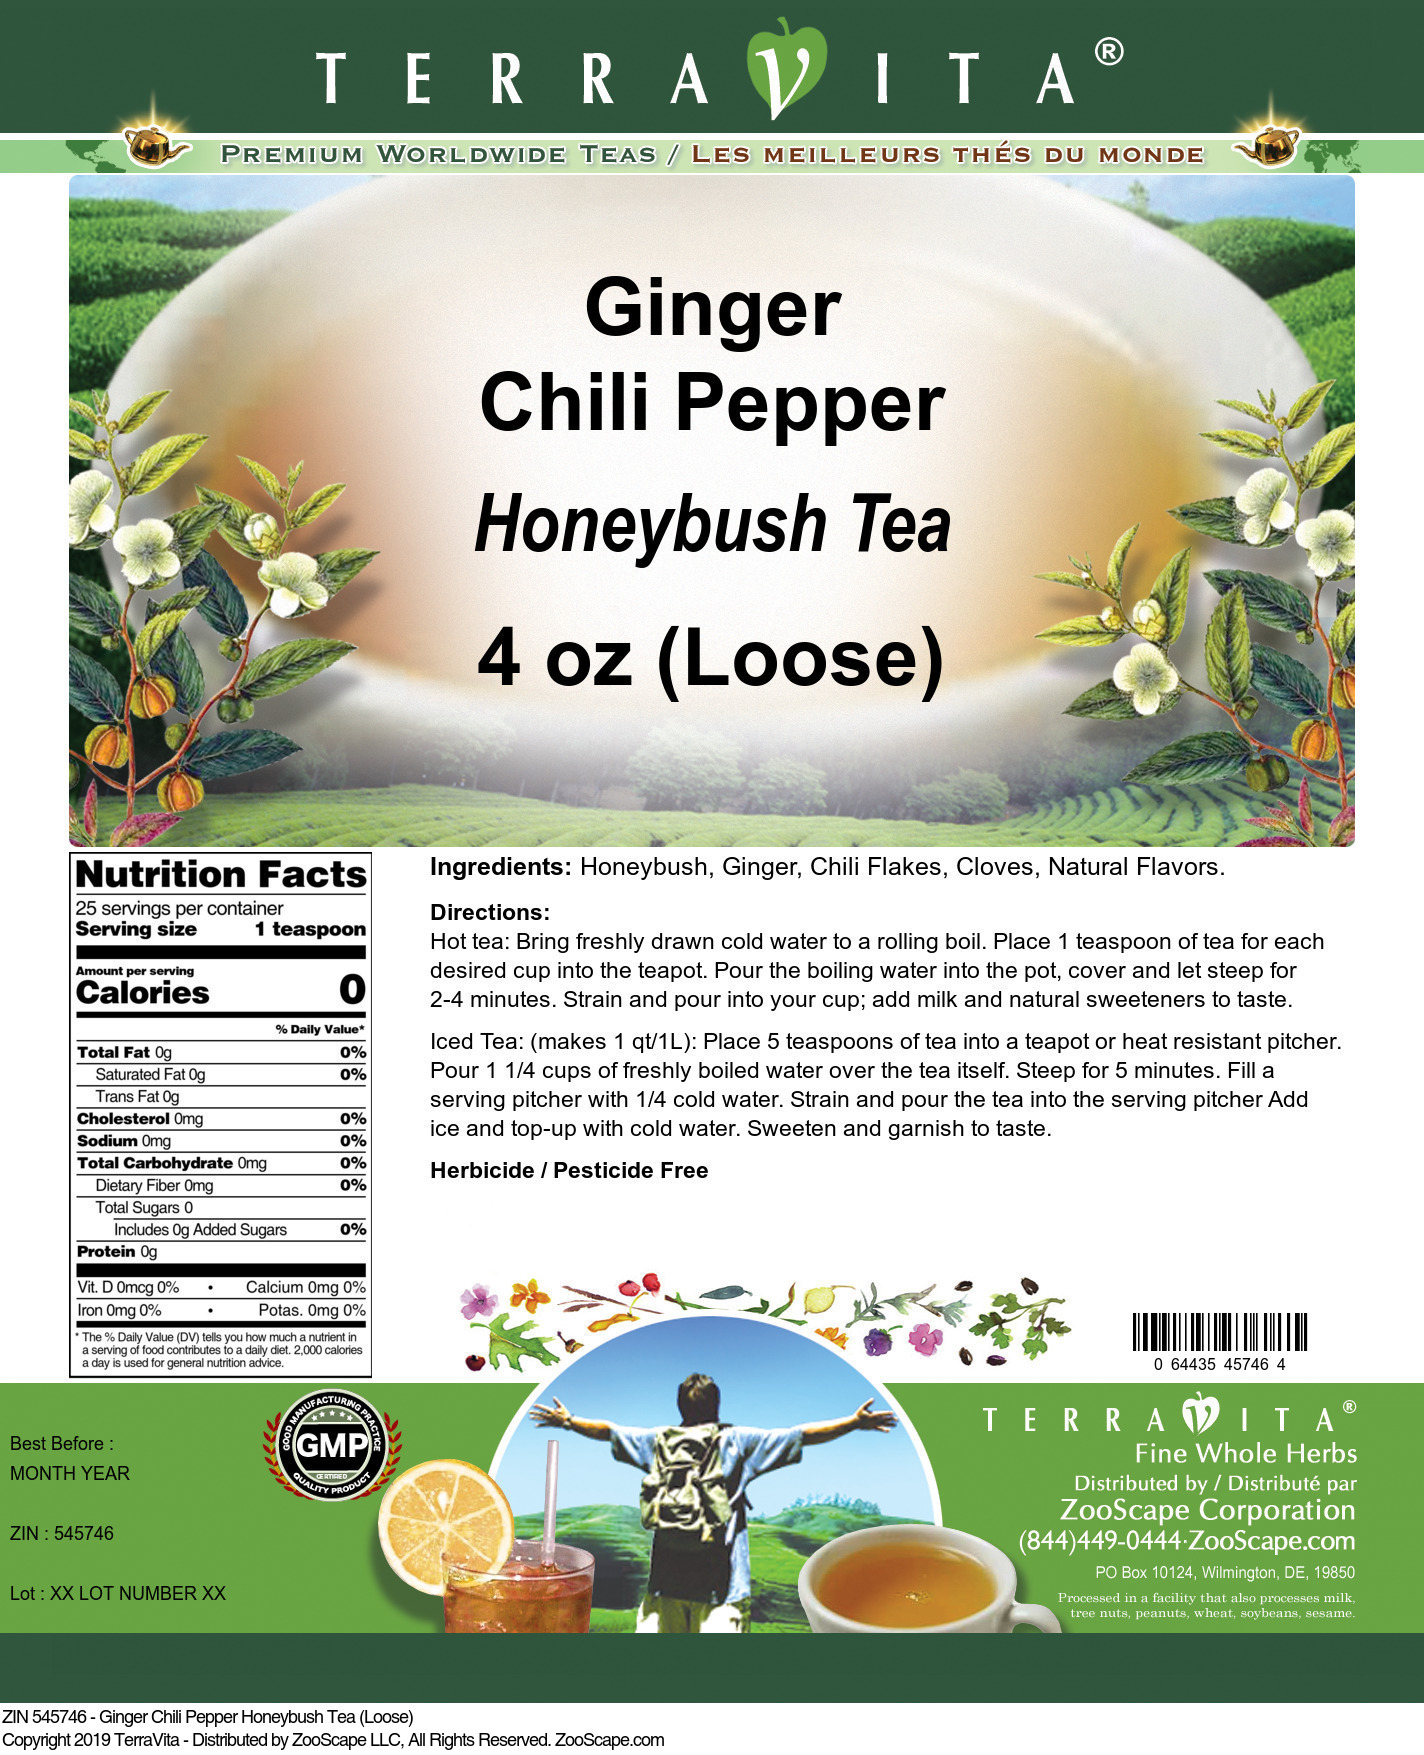 Ginger Chili Pepper Honeybush Tea (Loose) - Label